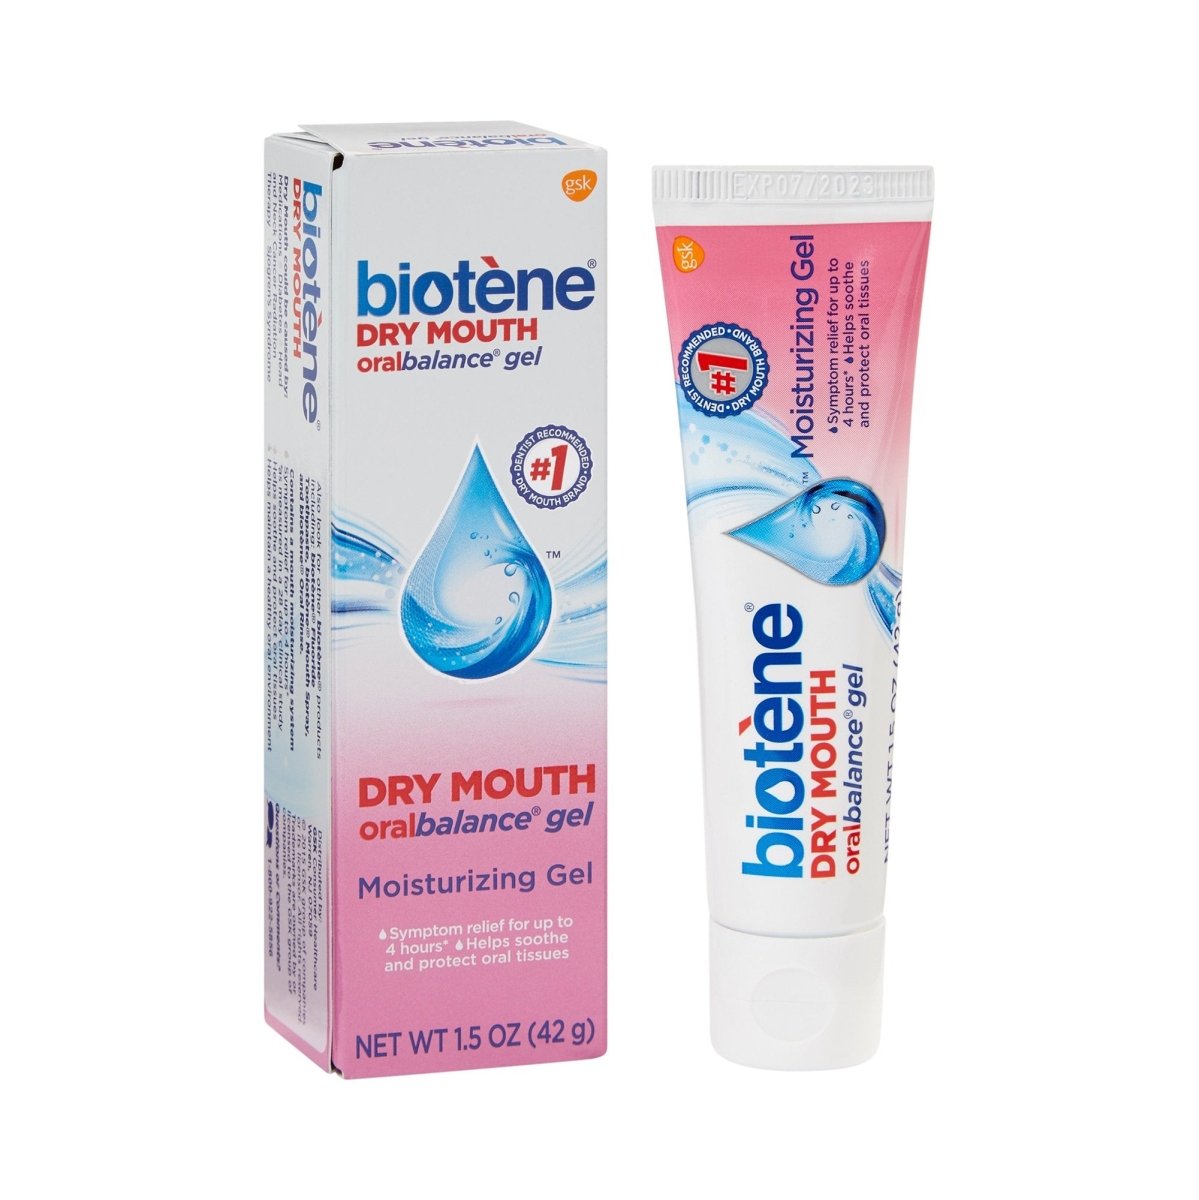 Biotene Dry Mouth Oral Balance Gel - 461282_EA - 1